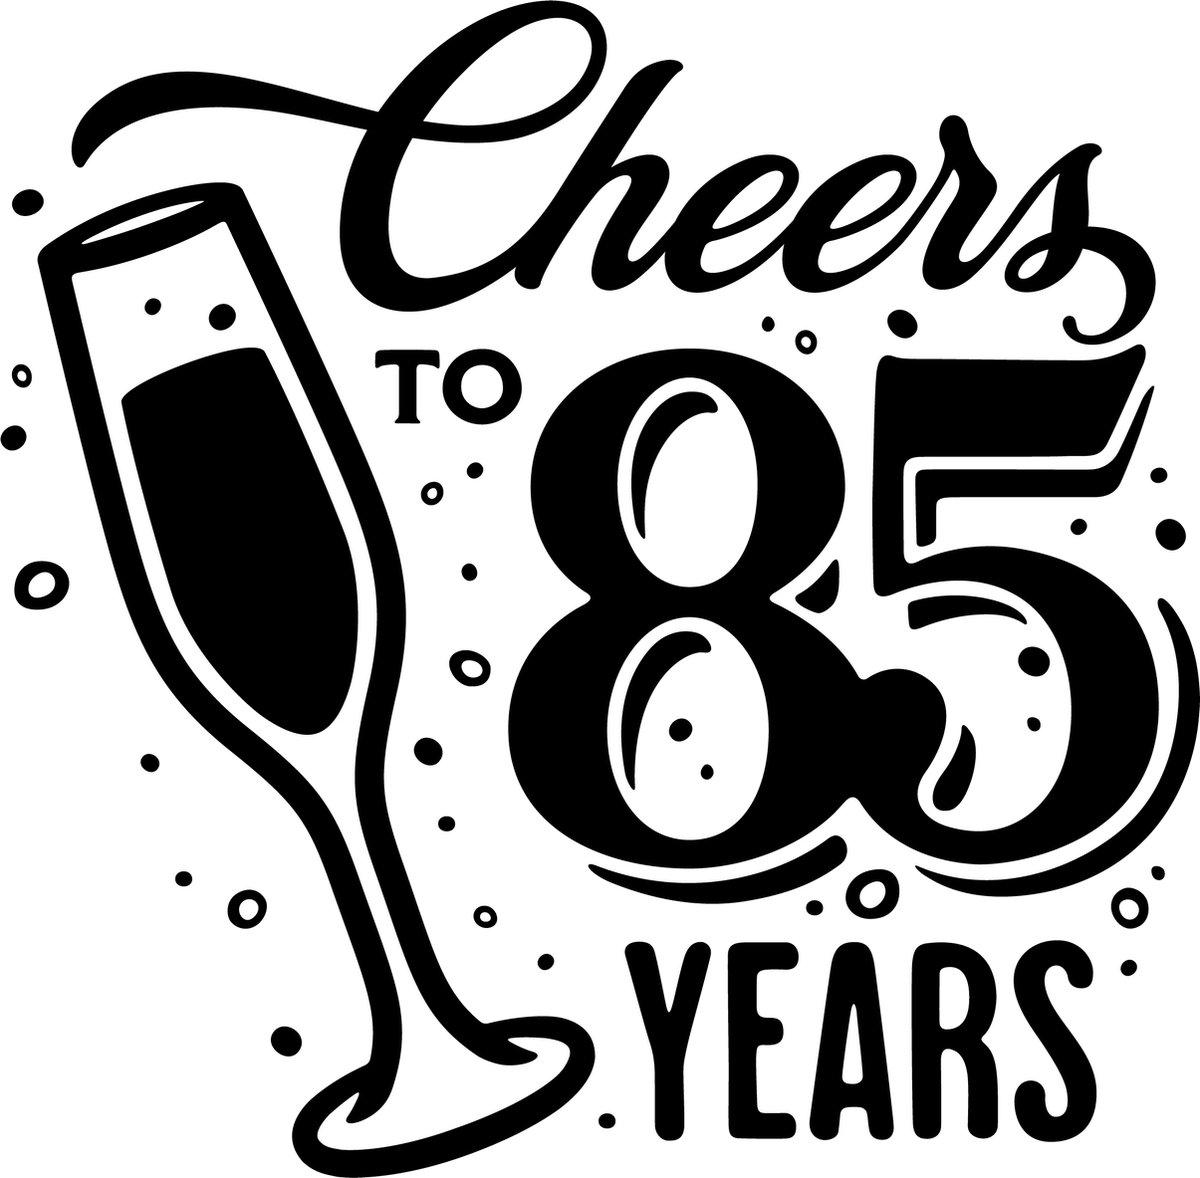 Sticker - Cheers to 85 years - 30x30cm - wit - 1 stuks - stickers - verjaardag - verjaardag decoratie - verjaardag versiering - feest - feest versiering - feestartikelen - raamstickers - raamsticker - Stickers volwassenen